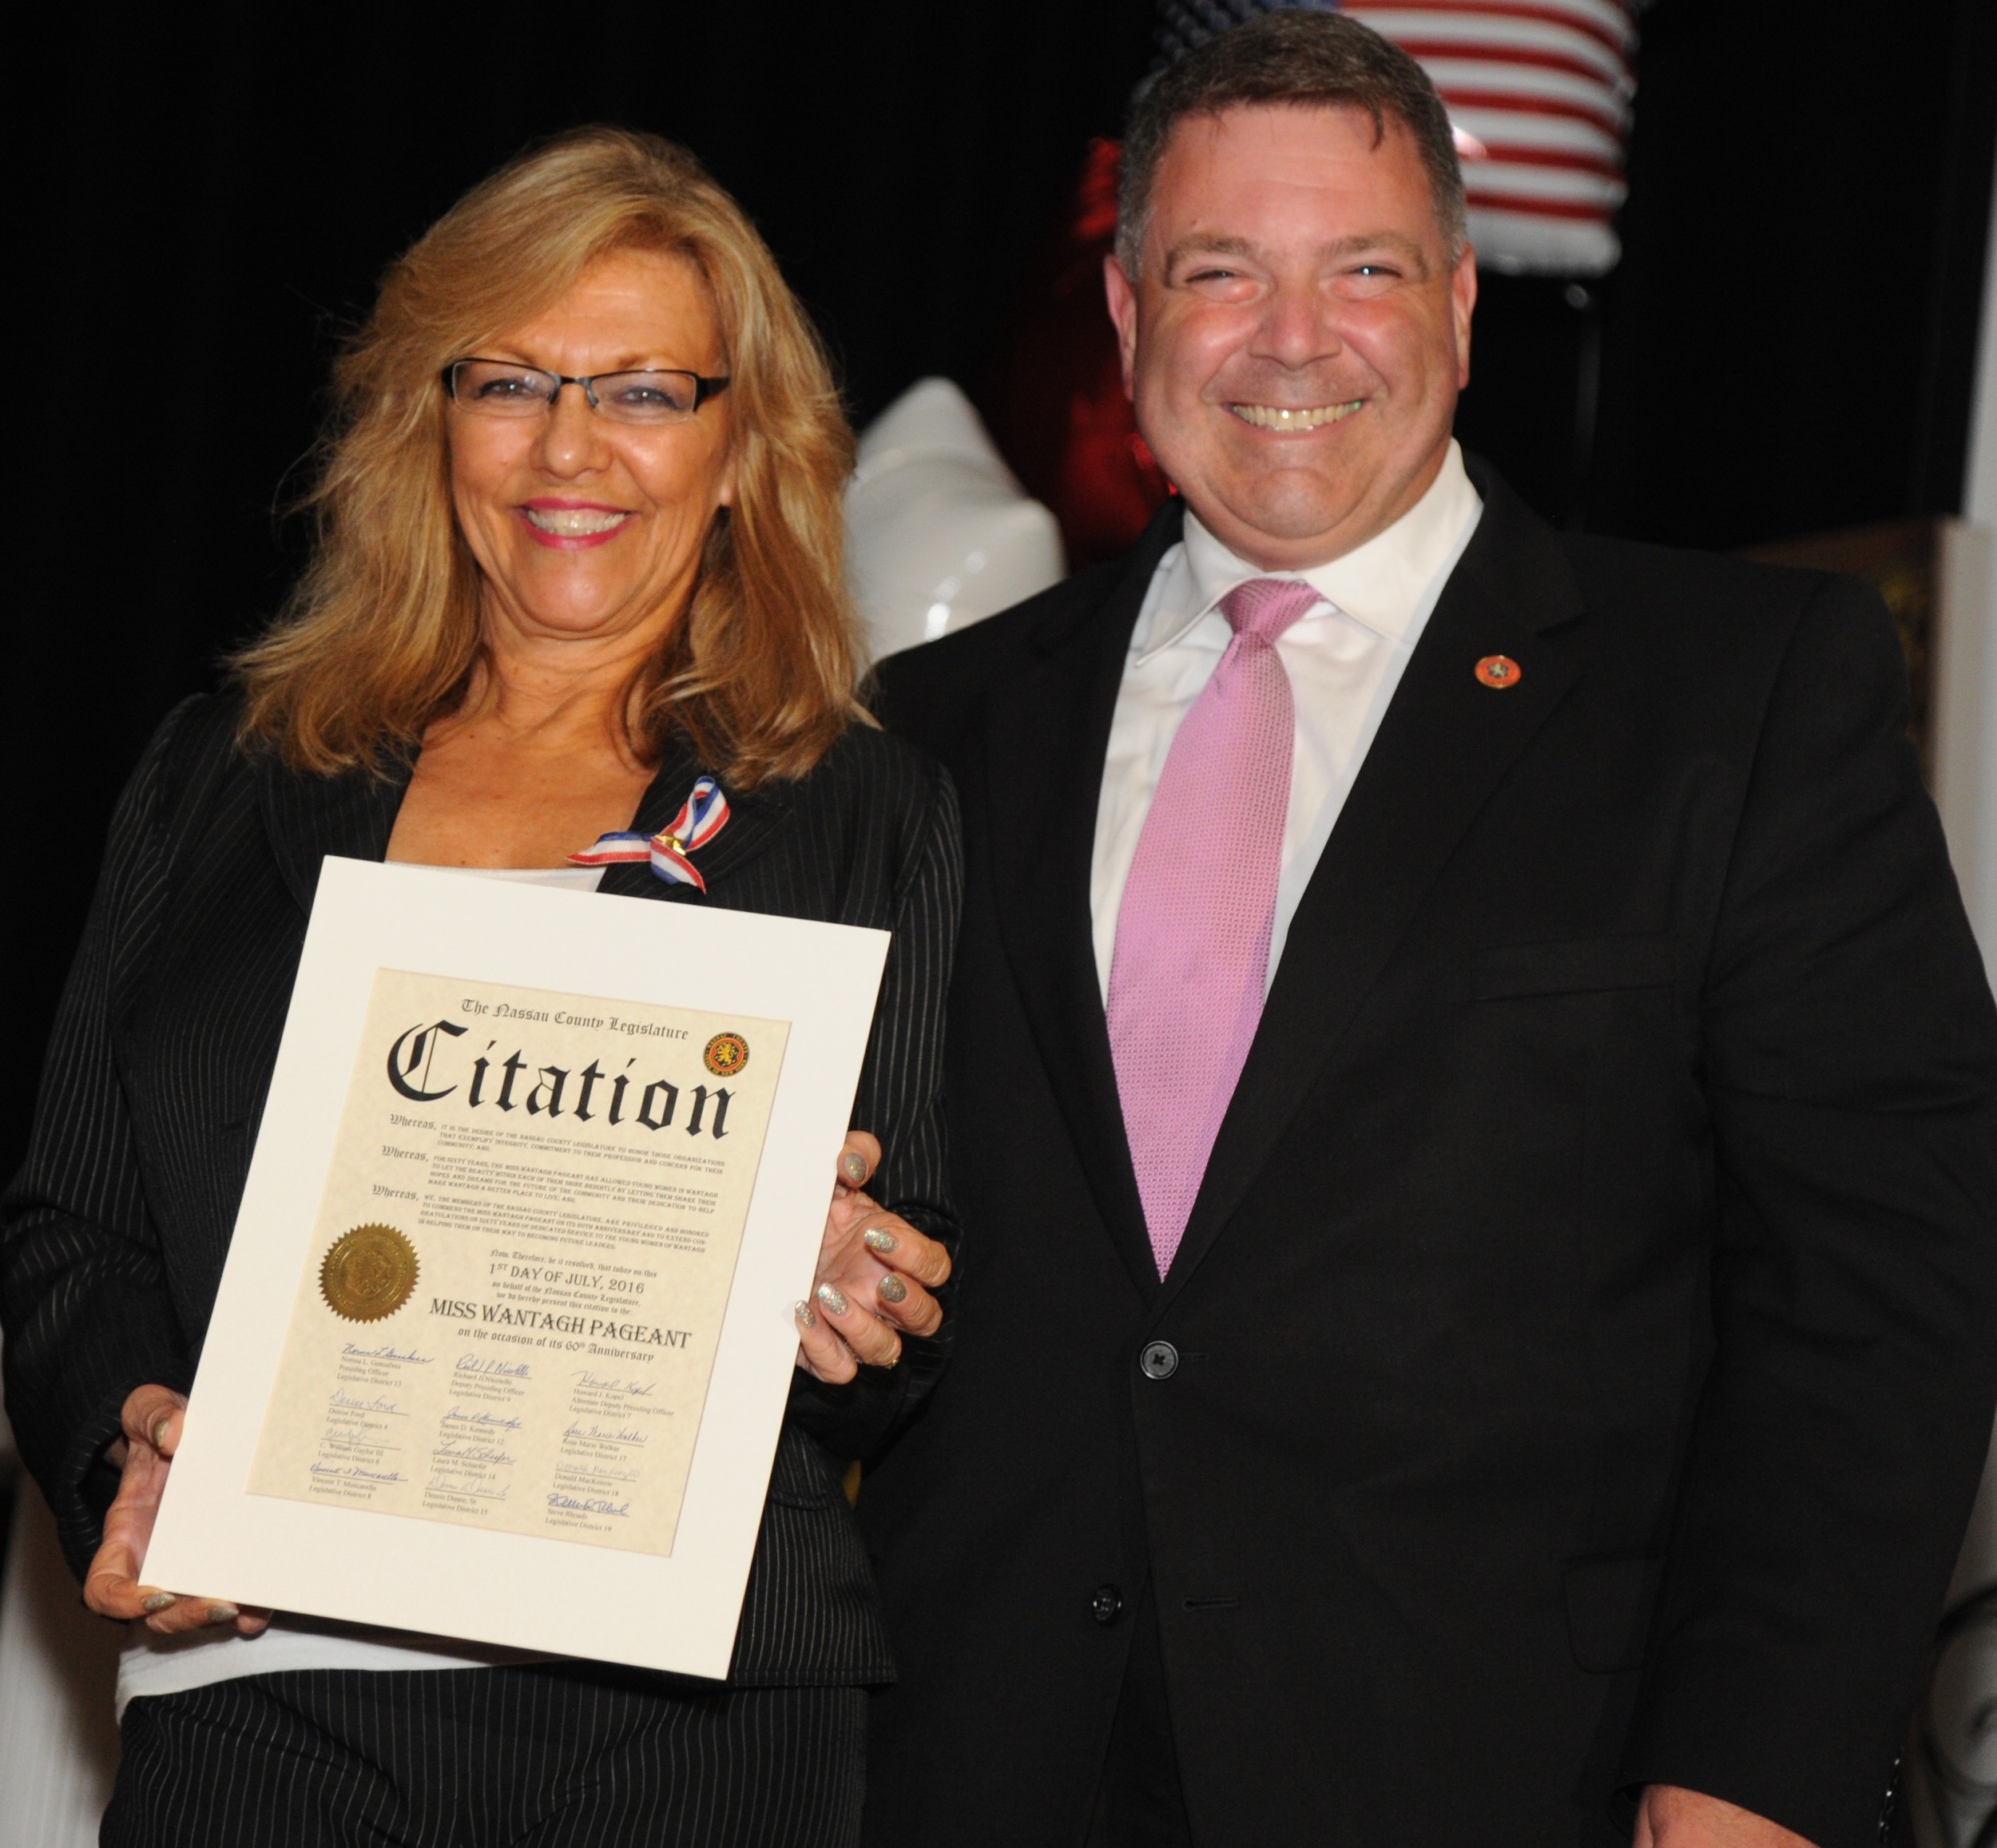 Nassau County Legislator Steven Rhoads presented a citation to Pageant Coordinator Ella Stevens.